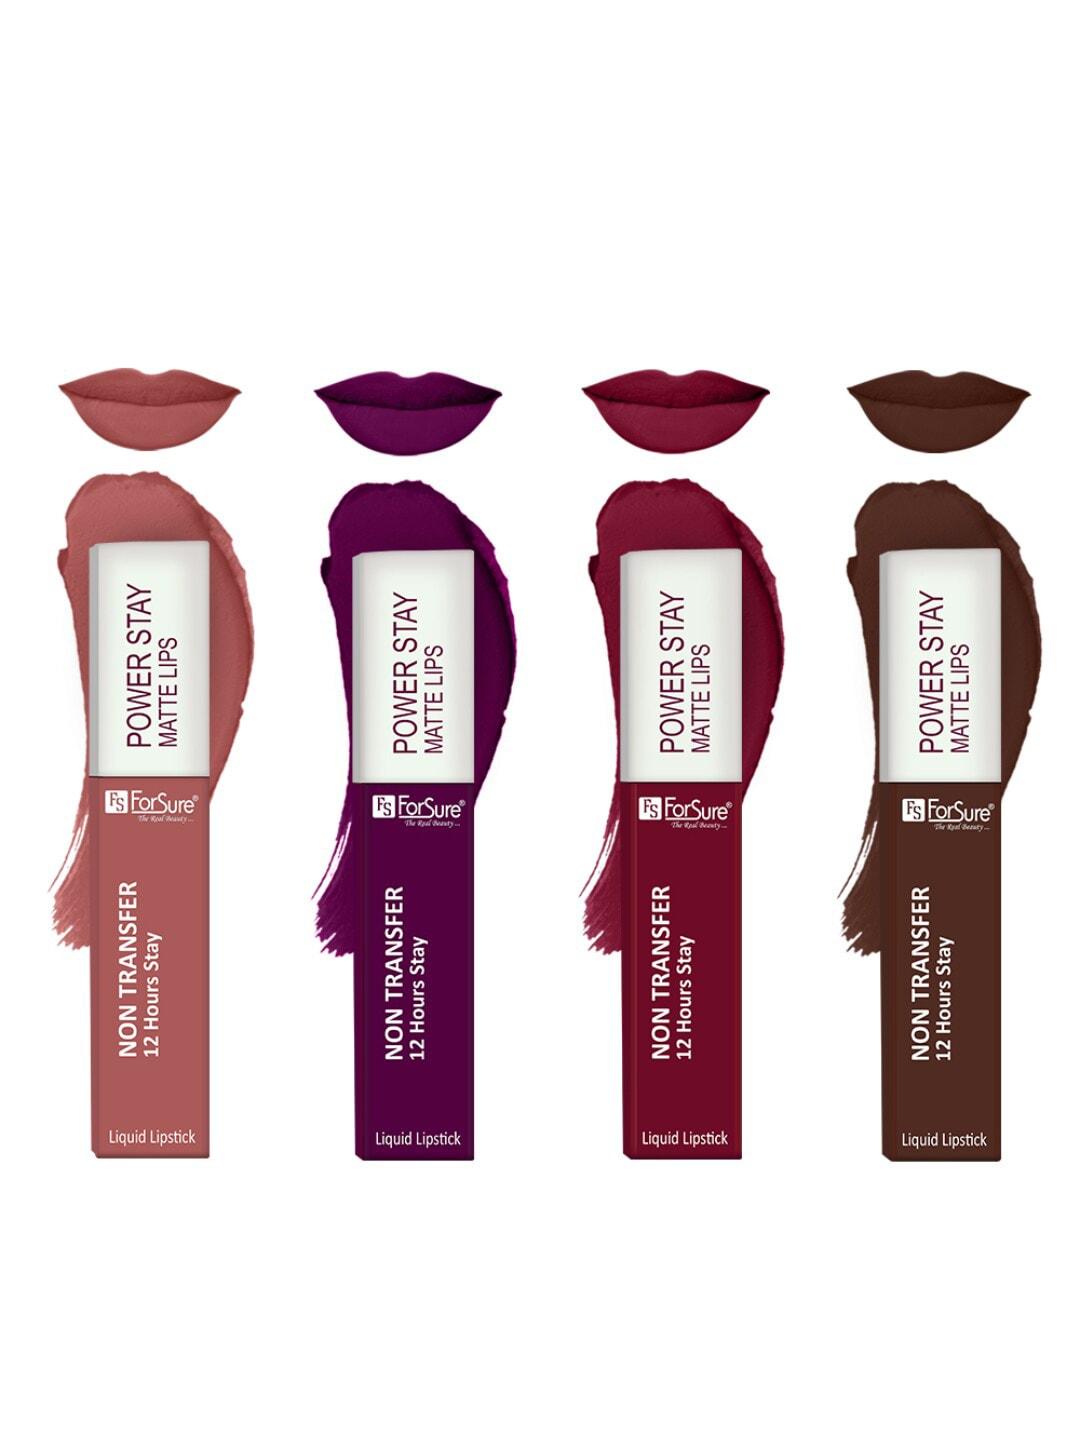 ForSure Set Of 4 Power Stay Liquid Lipstick 5 ml Each - Shade 03, 09, 16, 21